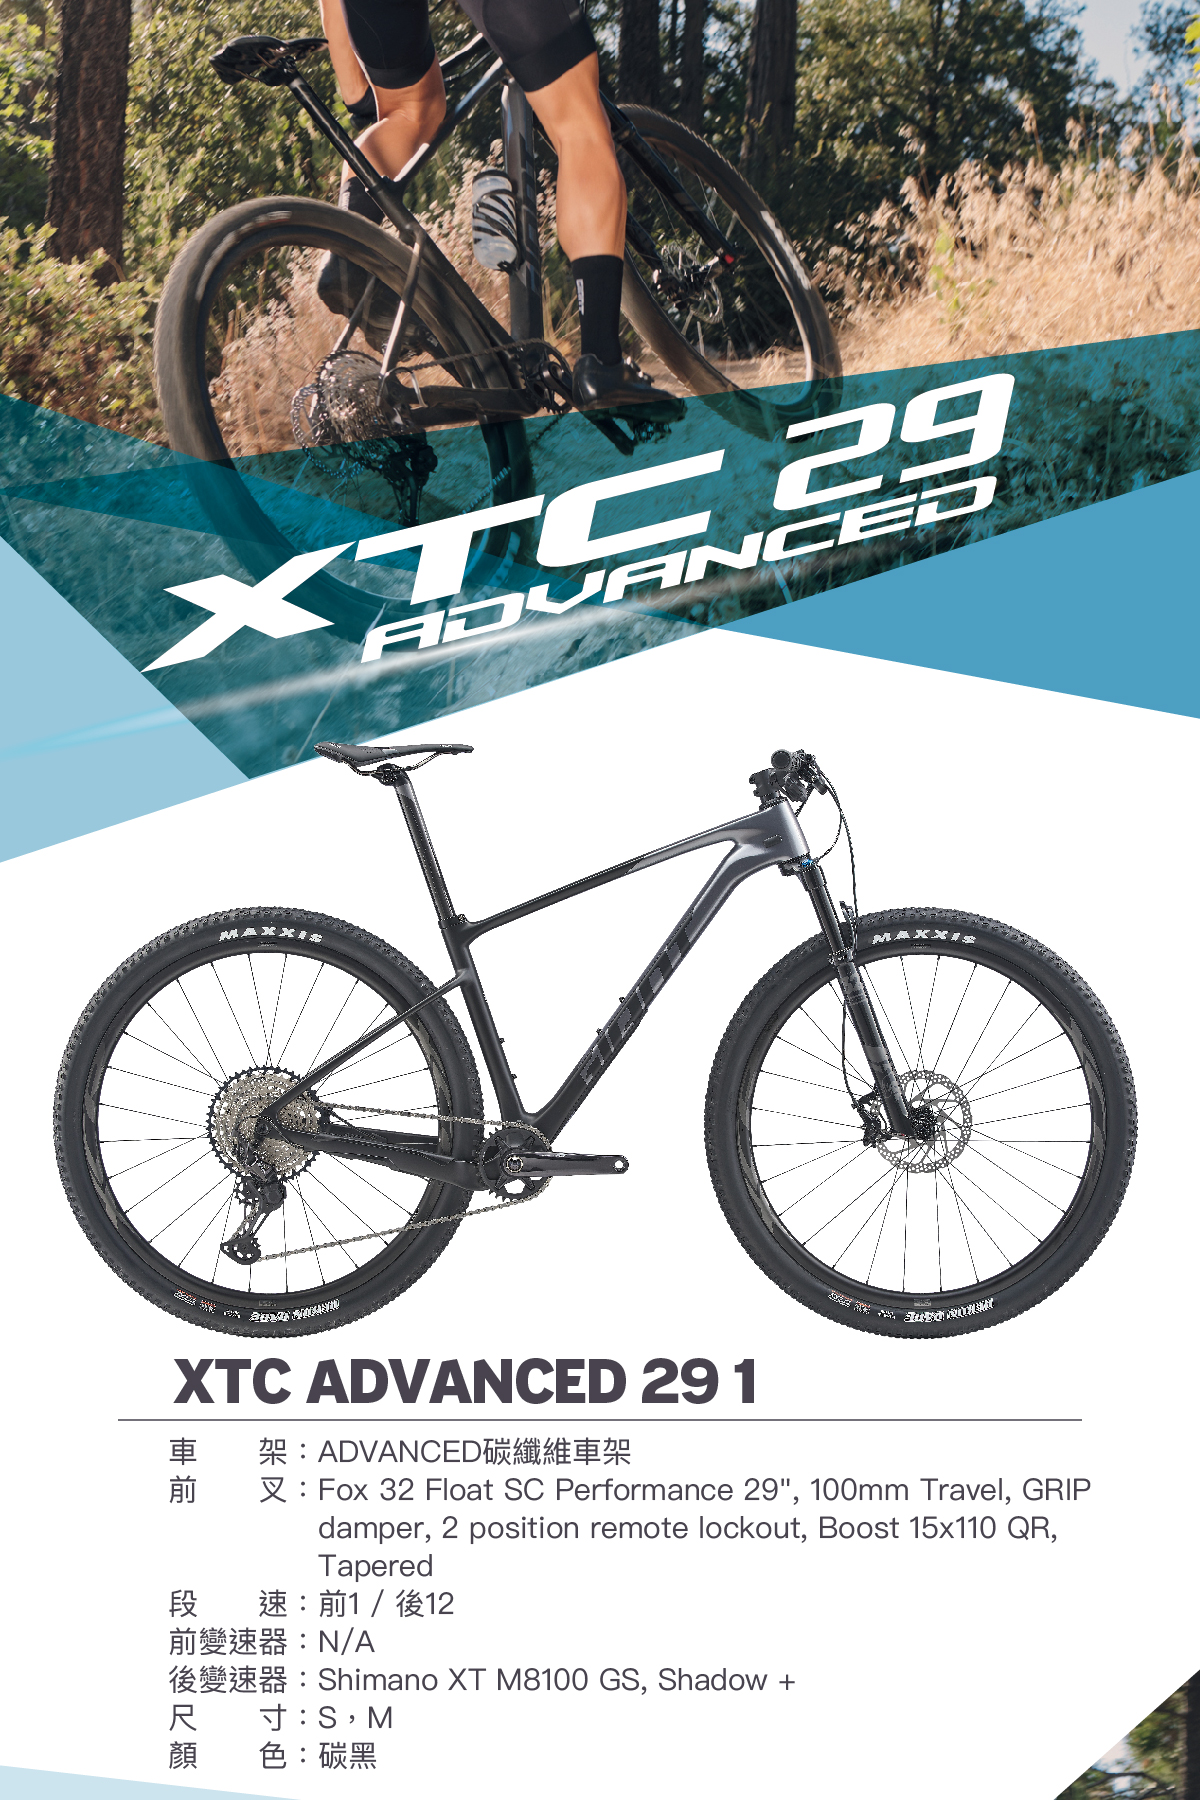 XTC advanced 29